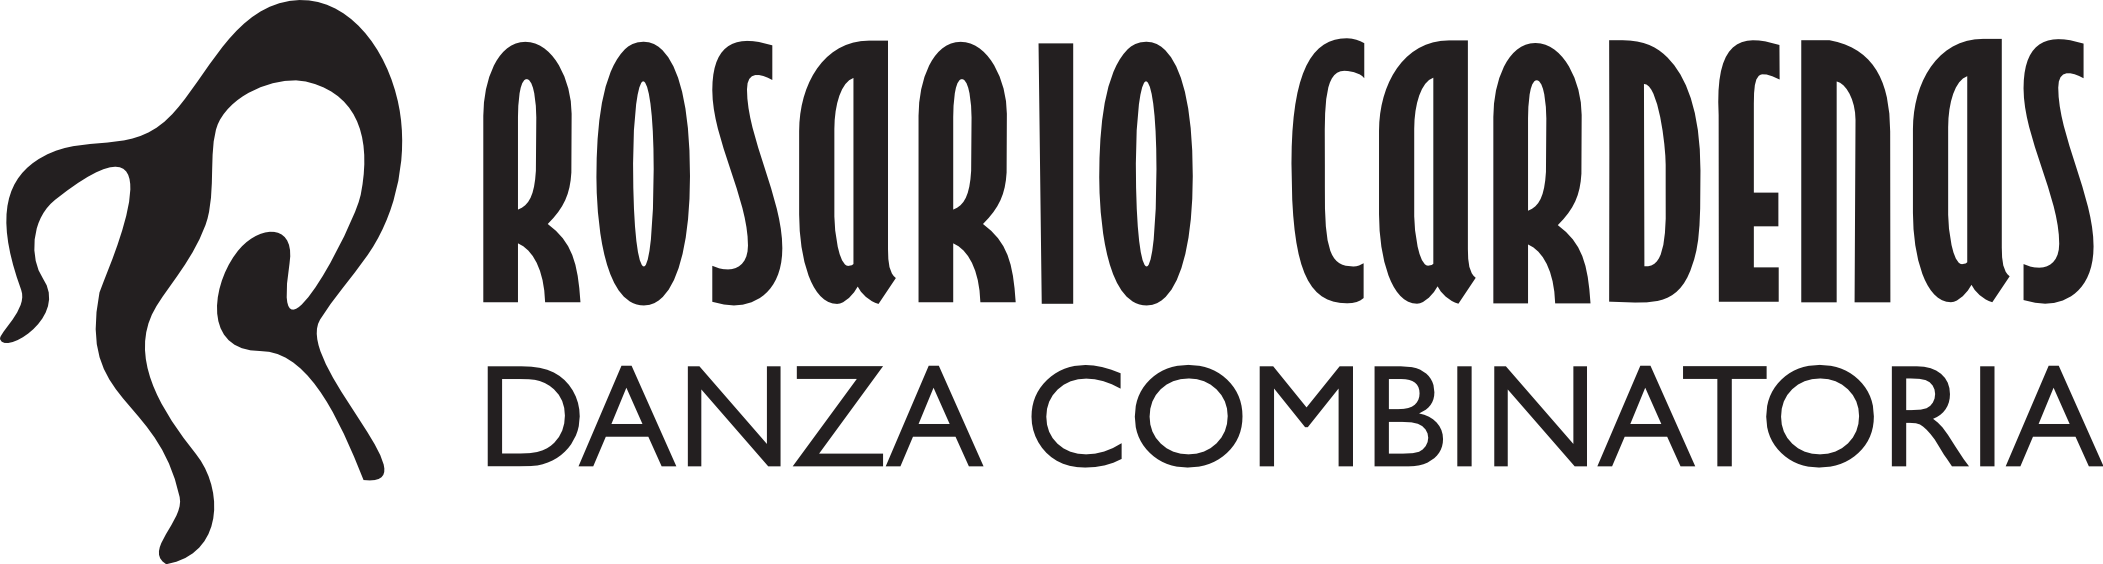 Logo Rosario Cardenas